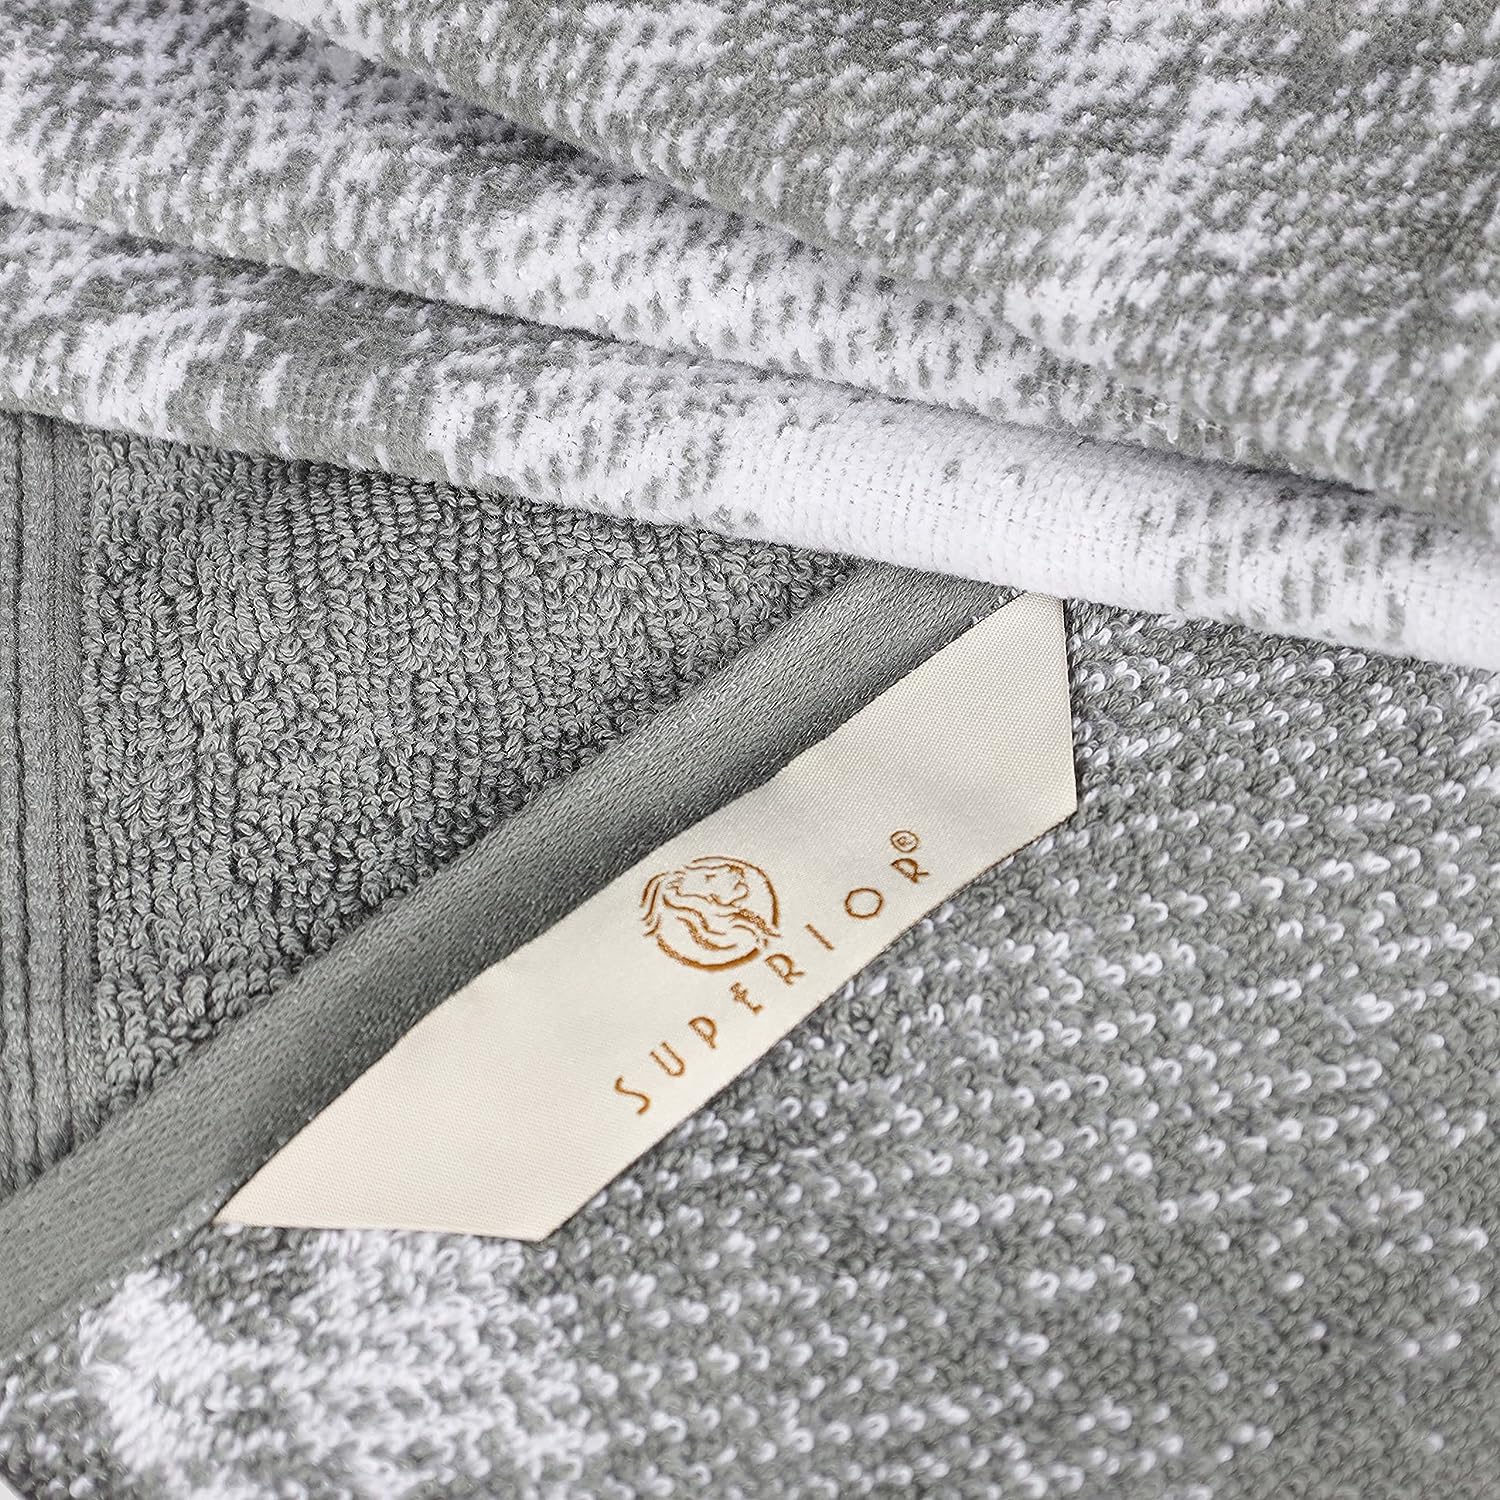 Superior Cotton Medium Weight Marble Solid Jacquard Border Bath Towels (Set of 4) - Grey